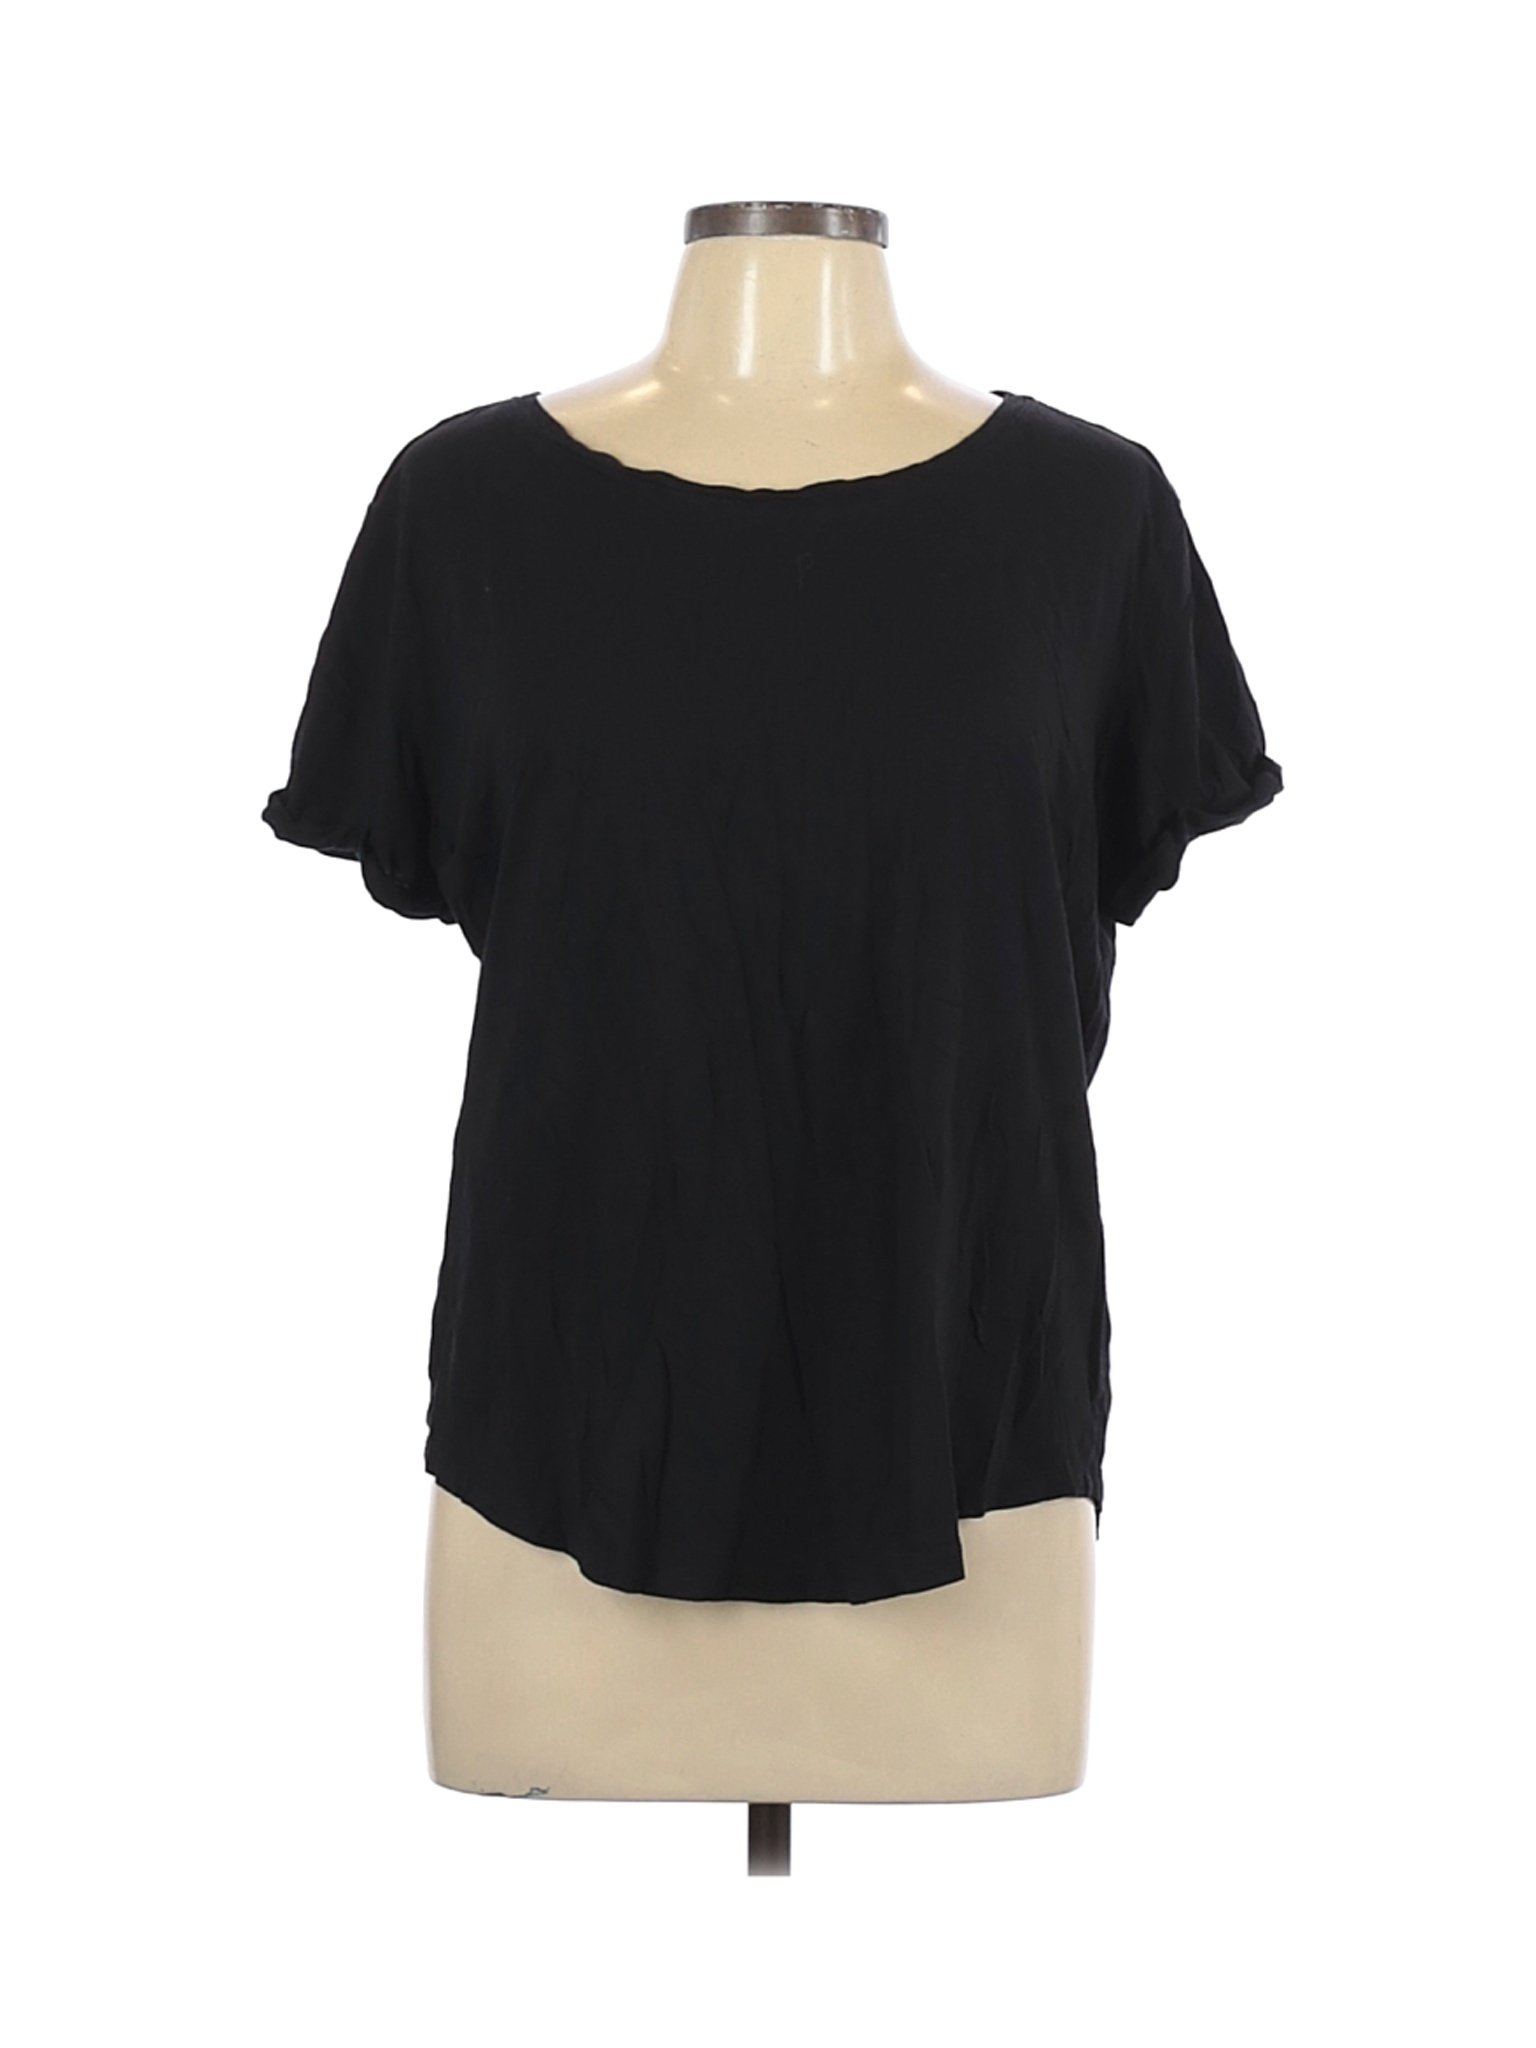 H&M Women Black Short Sleeve T-Shirt L | eBay